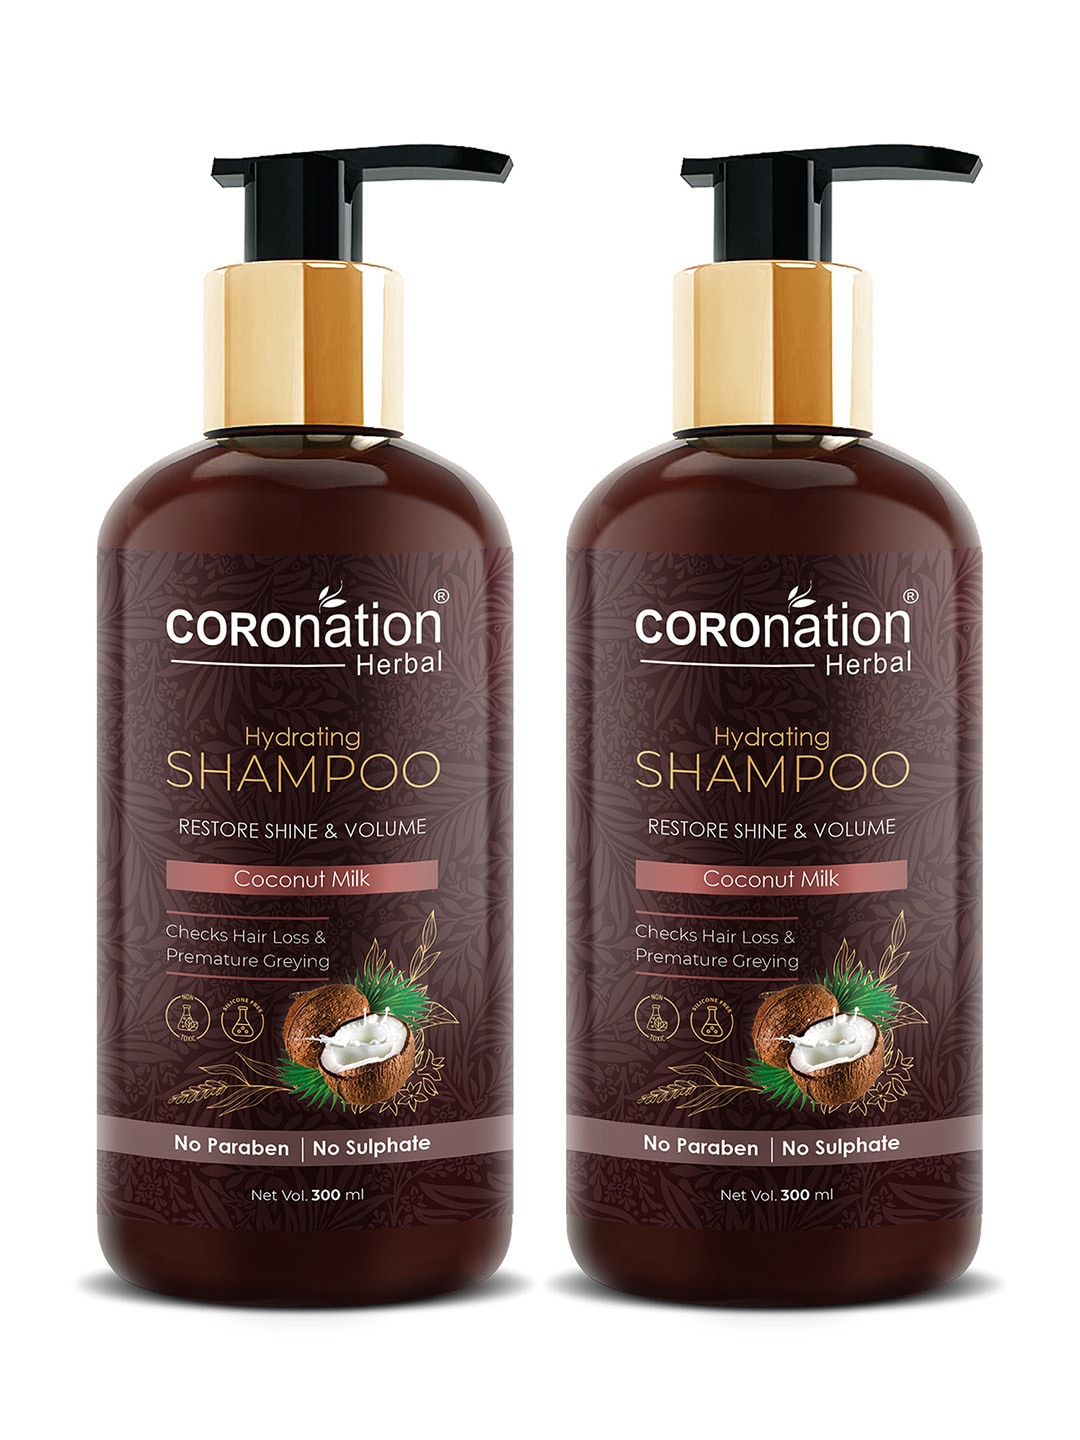 COROnation Herbal Set of 2 Coconut Milk Hydrating Shampoo 300 ml Each Price in India